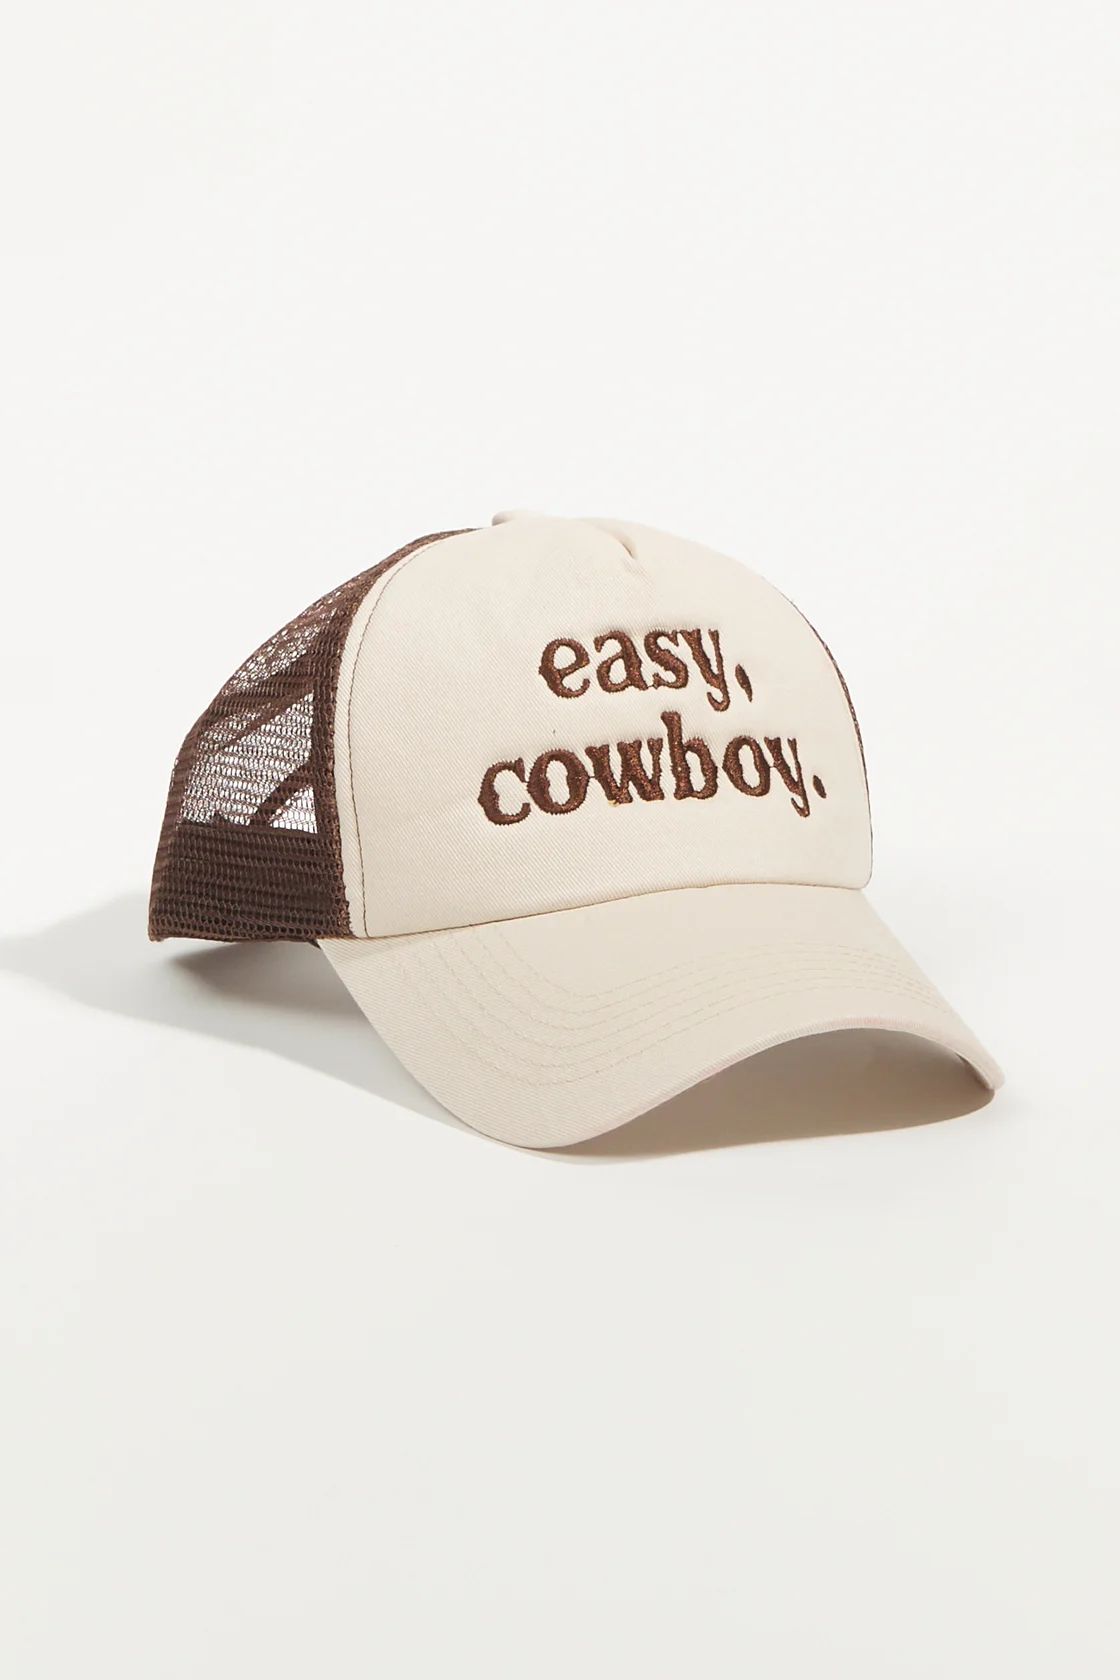 Easy Cowboy Trucker Hat | Altar'd State